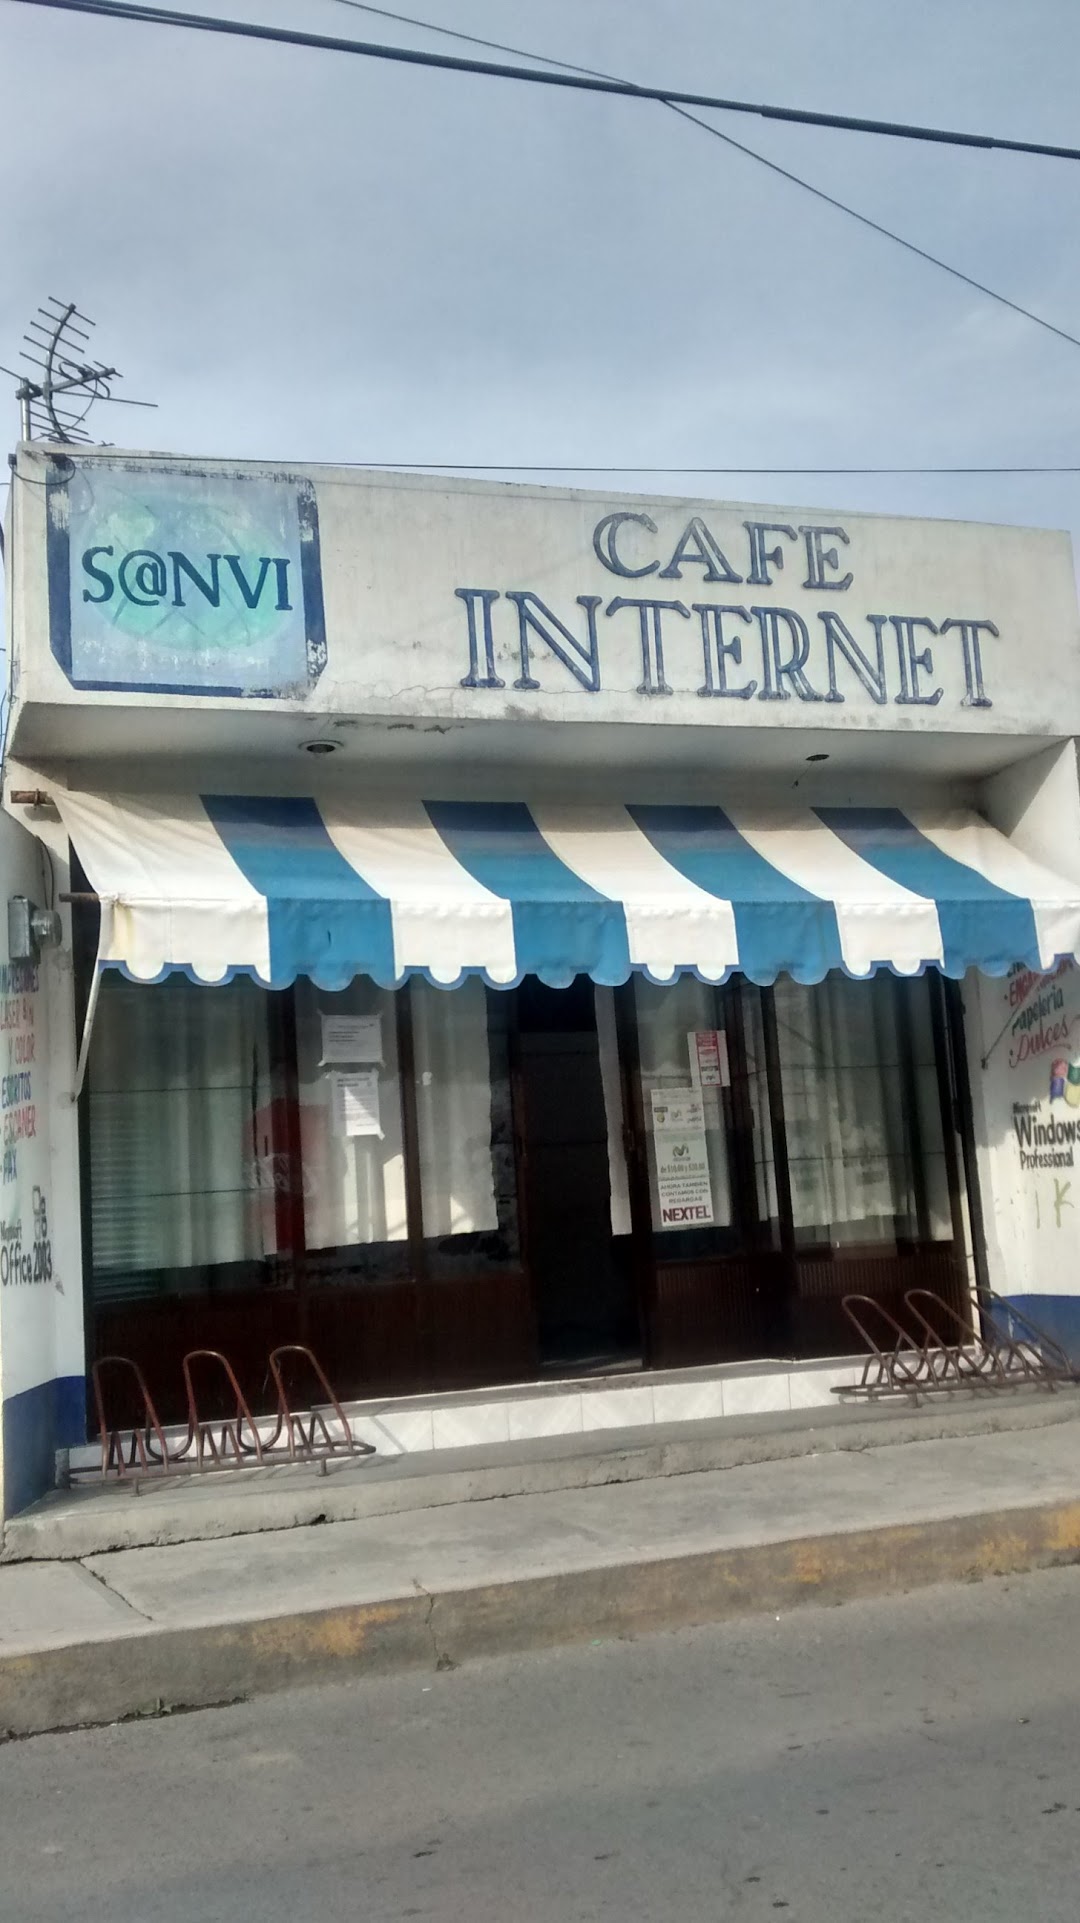 Sanvi Cafe Internet